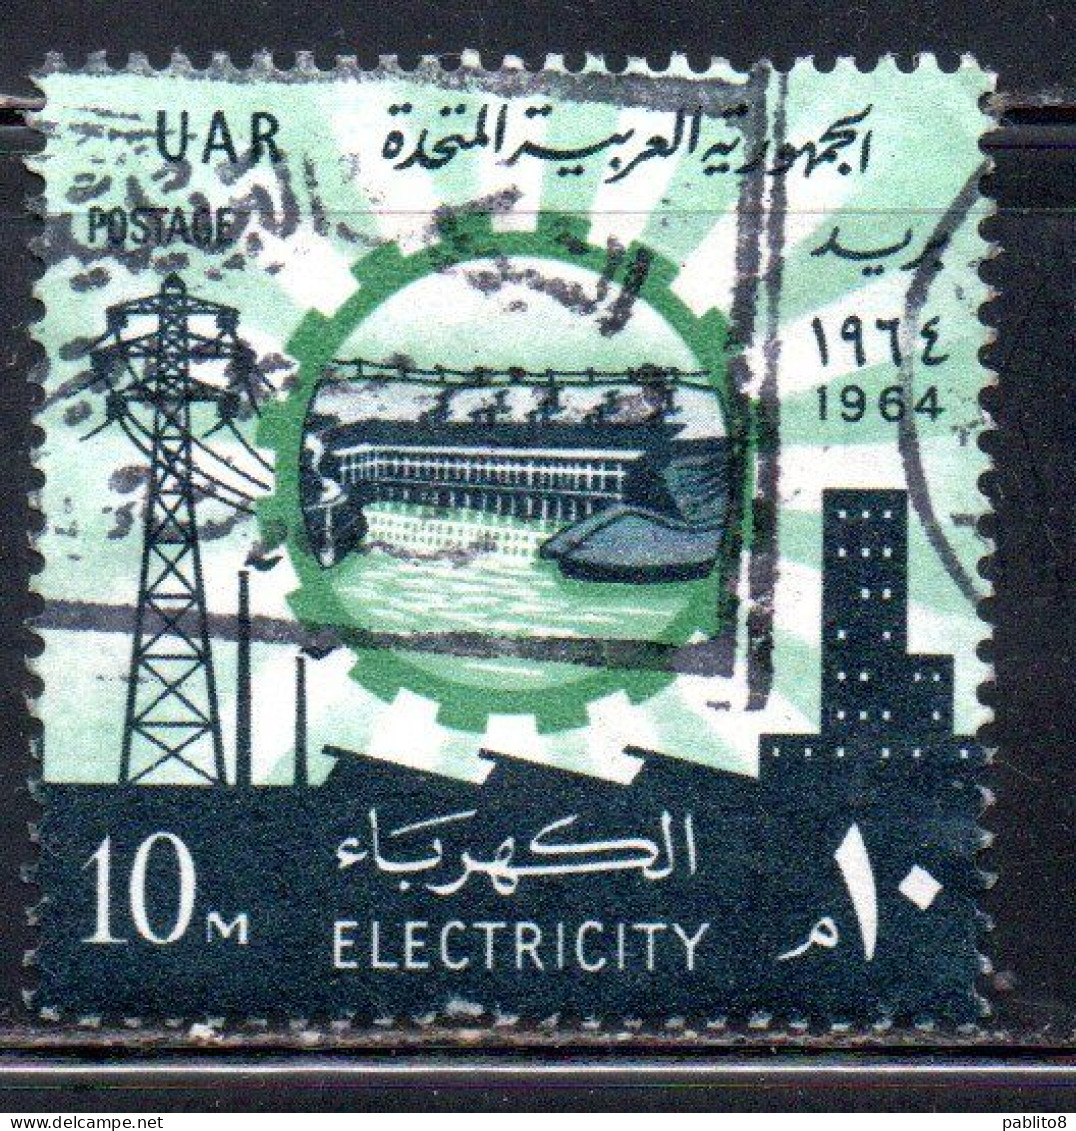 UAR EGYPT EGITTO 1964 ELECTRICITY ASWAN HIGH DAM HYDROELICTRIC POWER STATION LAND RECLAMATION 10m USED USATO - Oblitérés